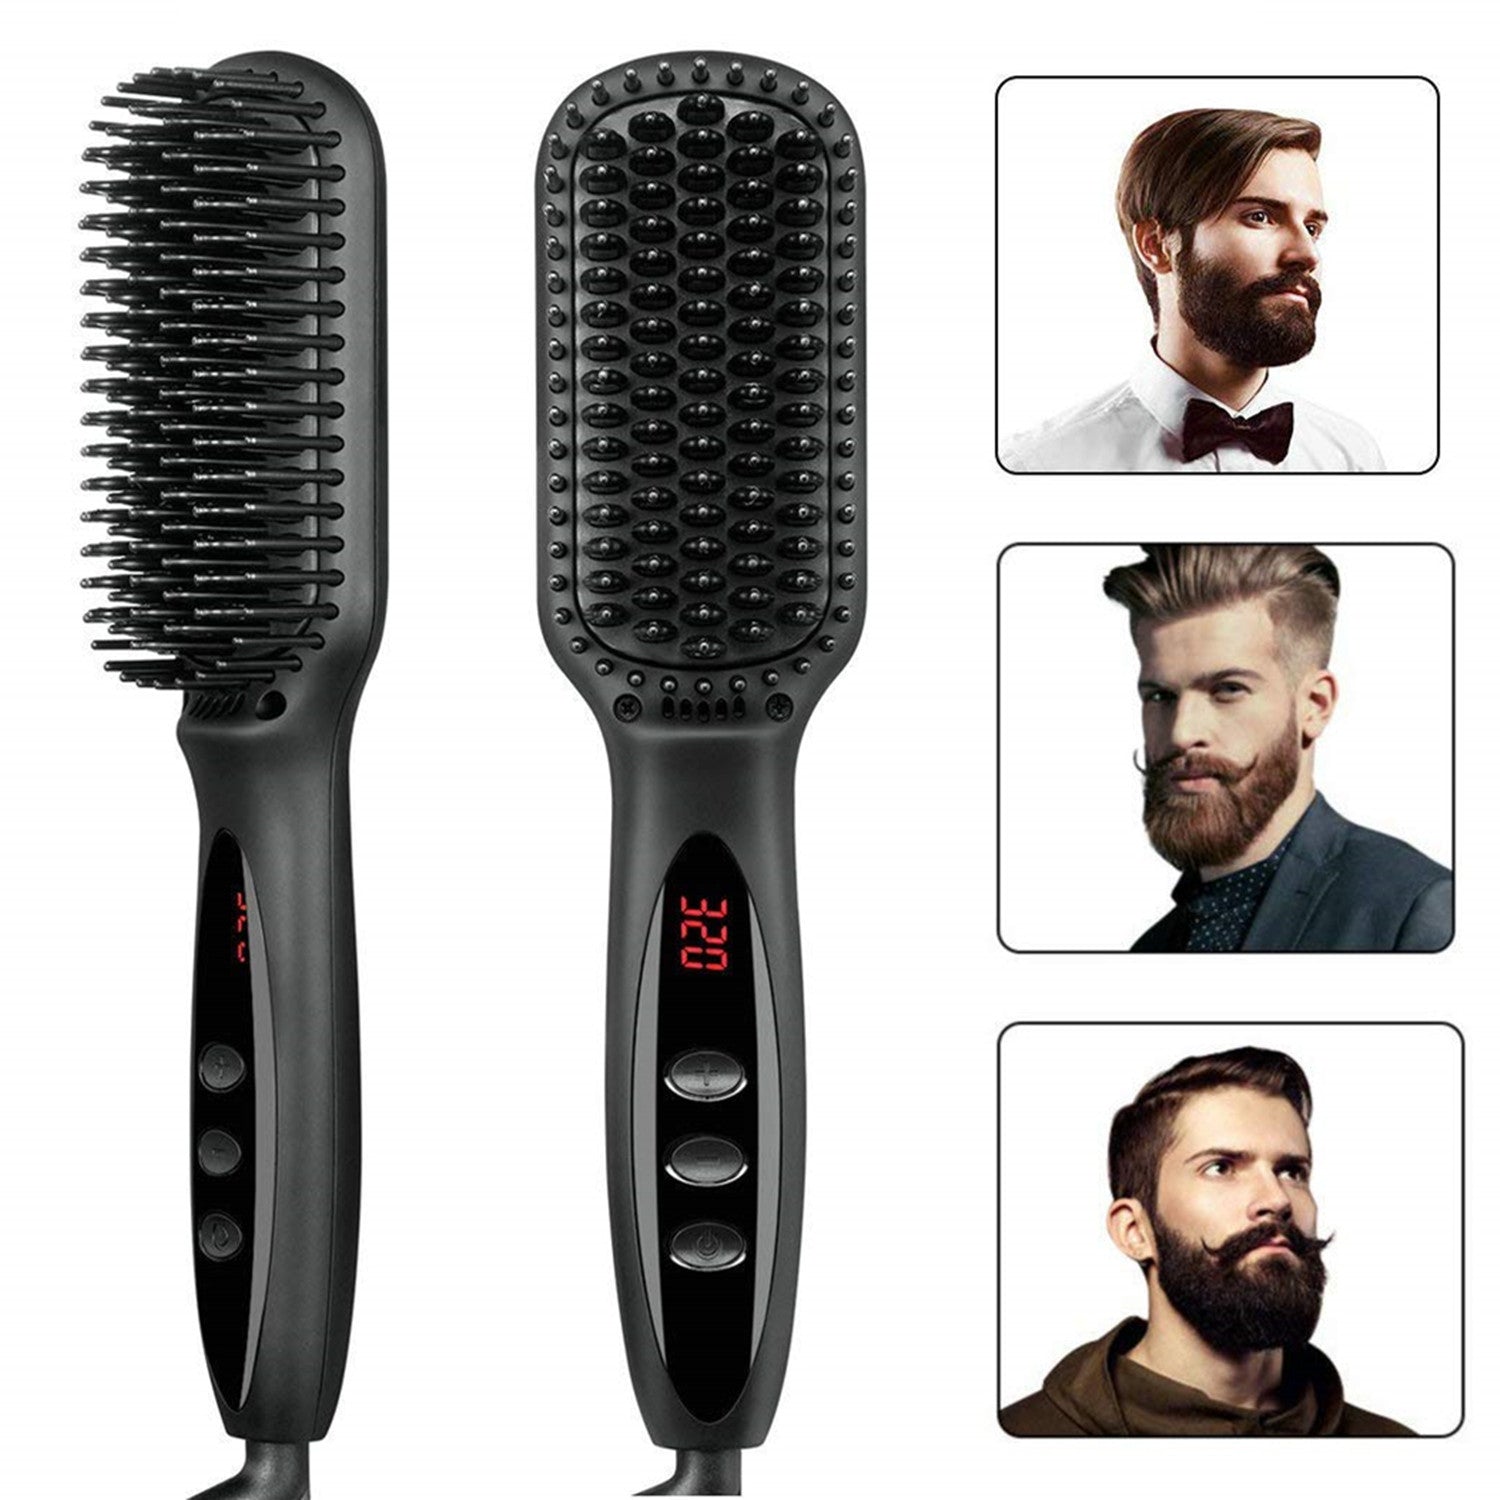 GroomEasy™ Gentlemen's Grooming Straightener For both Beard & Hair